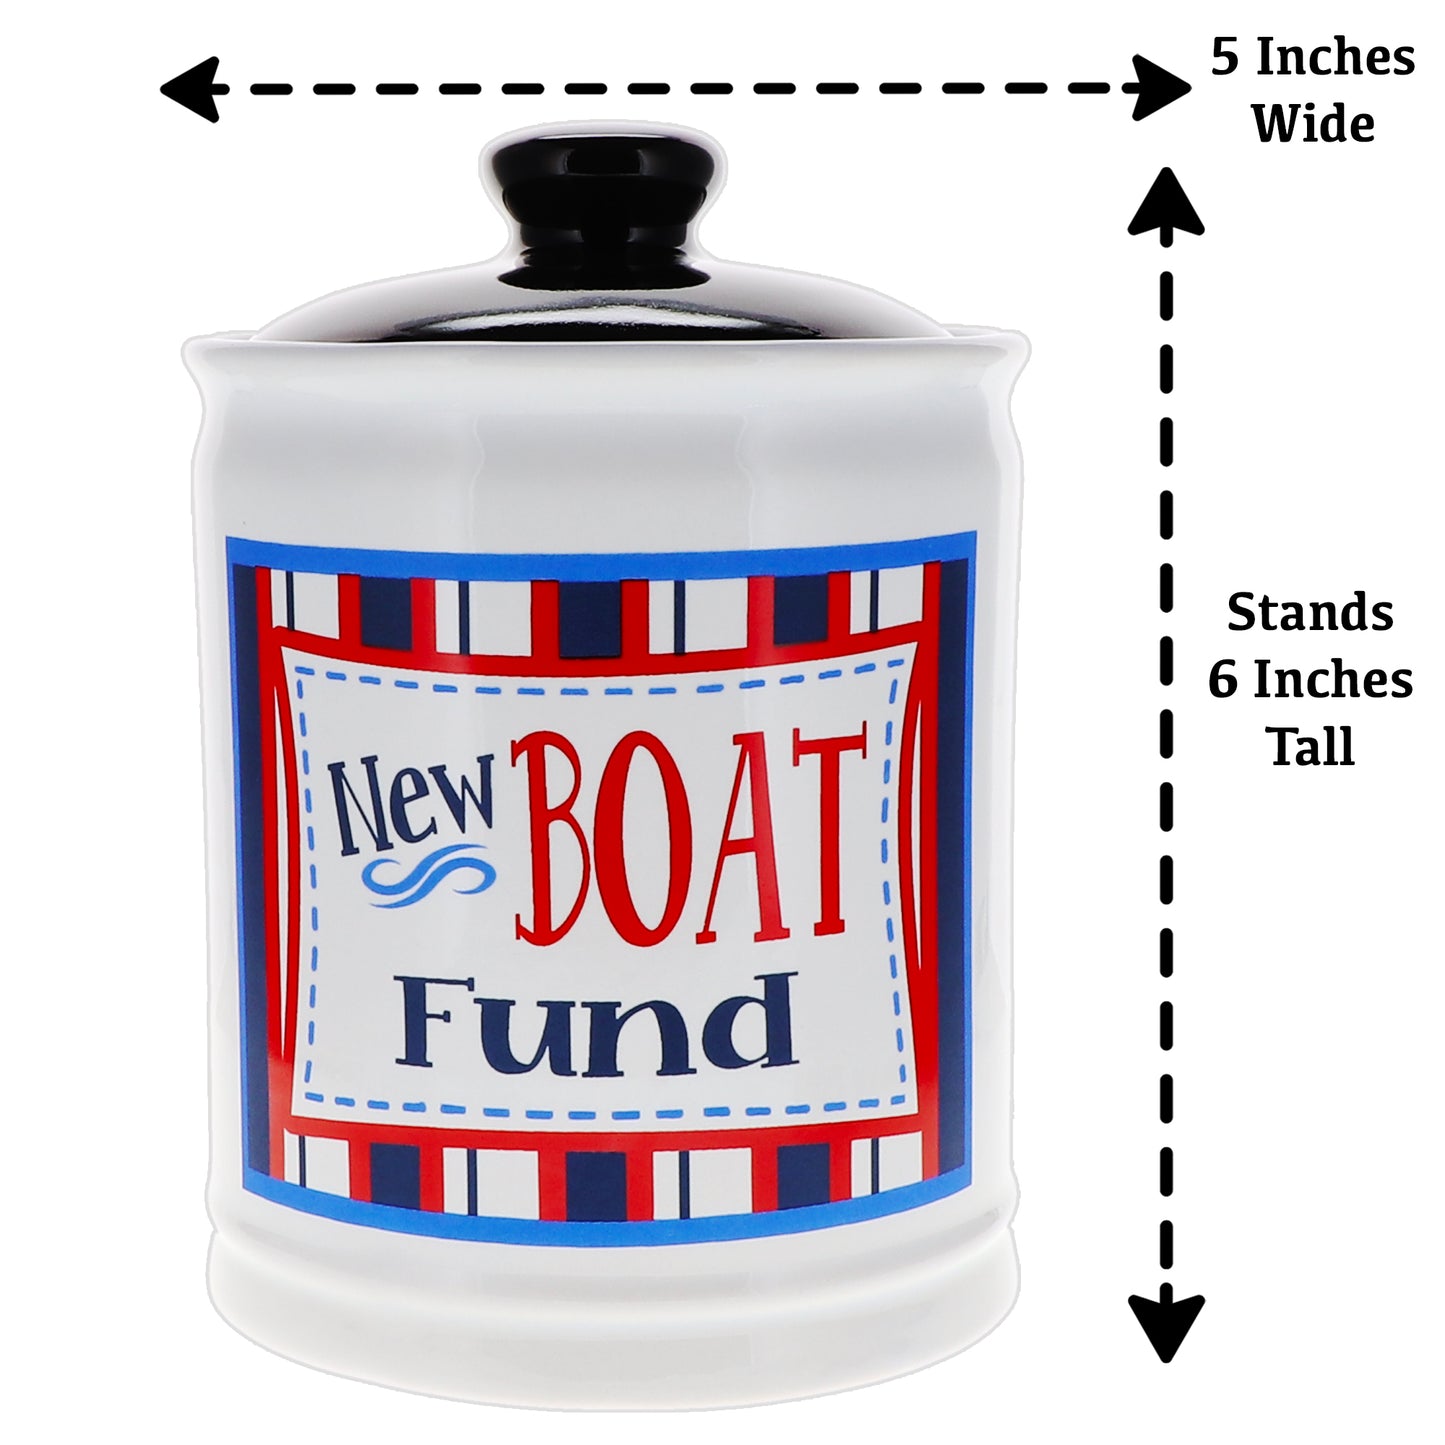 Cottage Creek New Boat Fund Piggy Bank, Ceramic, Multicolored, 6" Boating Fund Jar